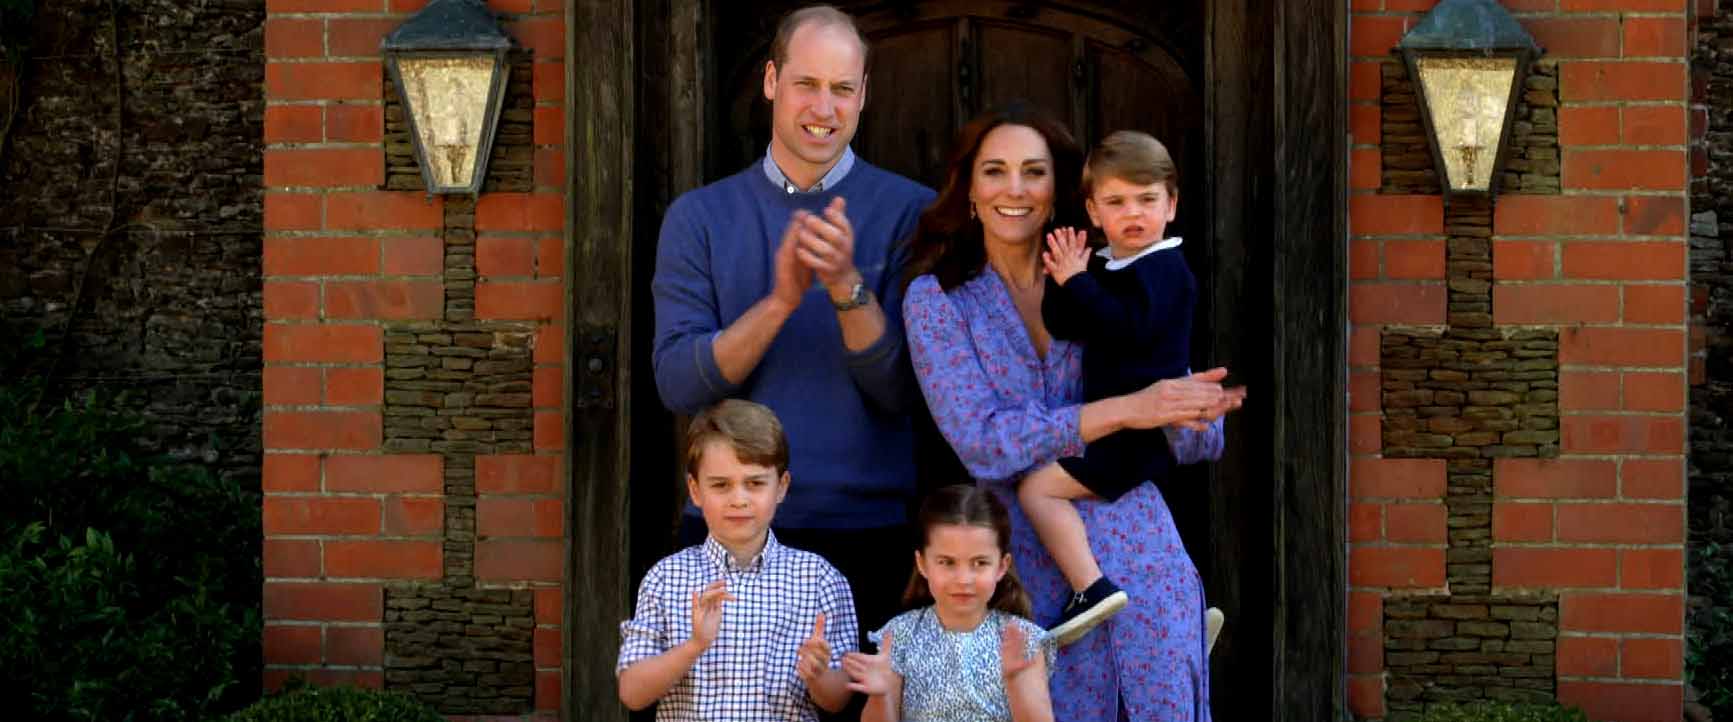 Prince William and Kate Middleton: A Royal Family Photo Album |  Entertainment Tonight